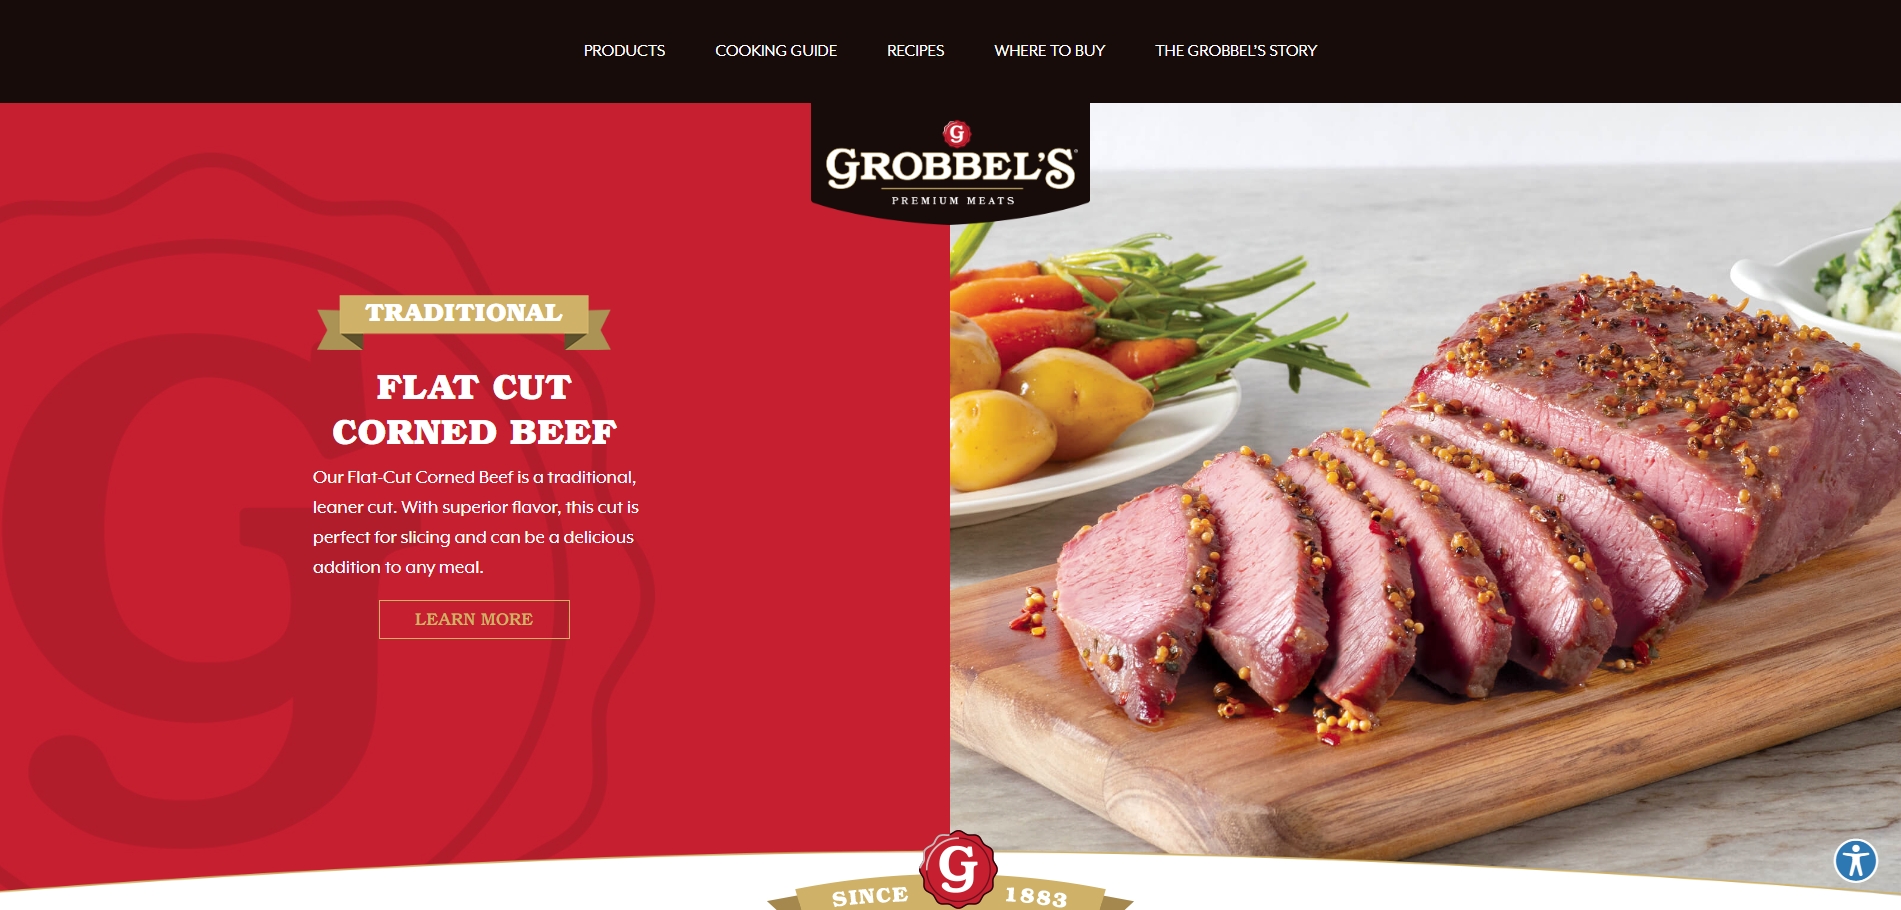 Grobbels site screenshot